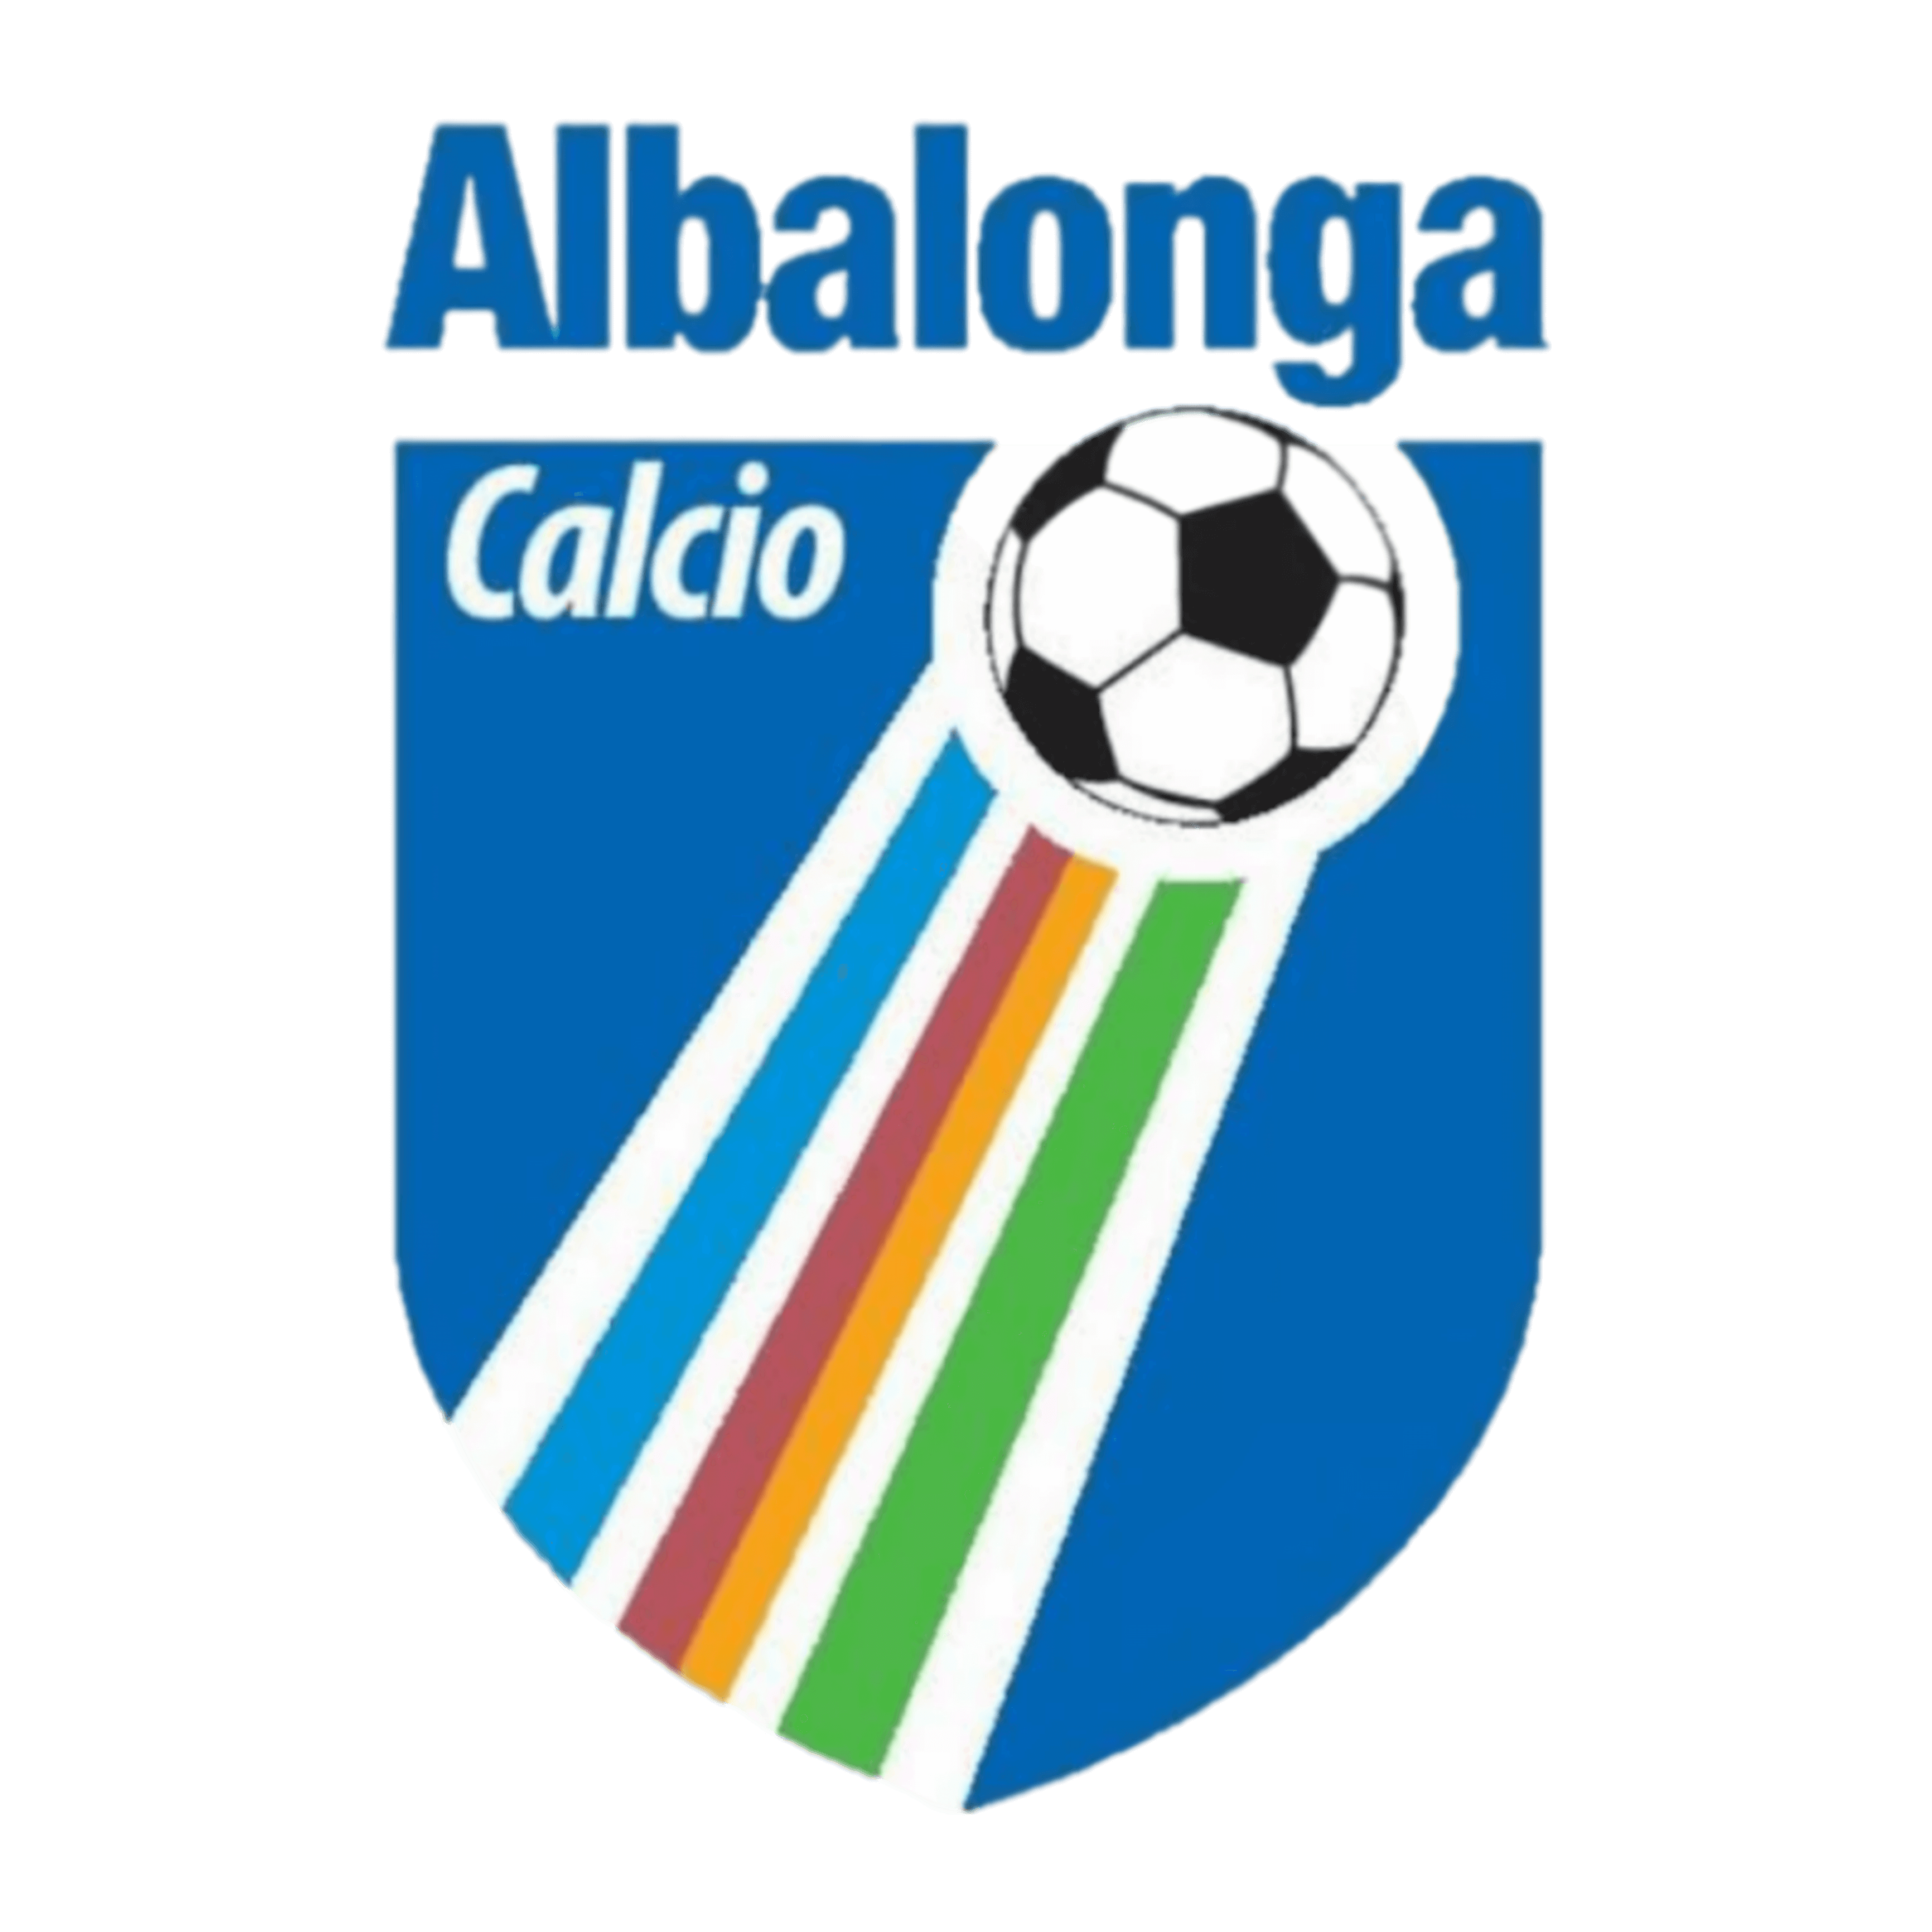 Albalonga Calcio